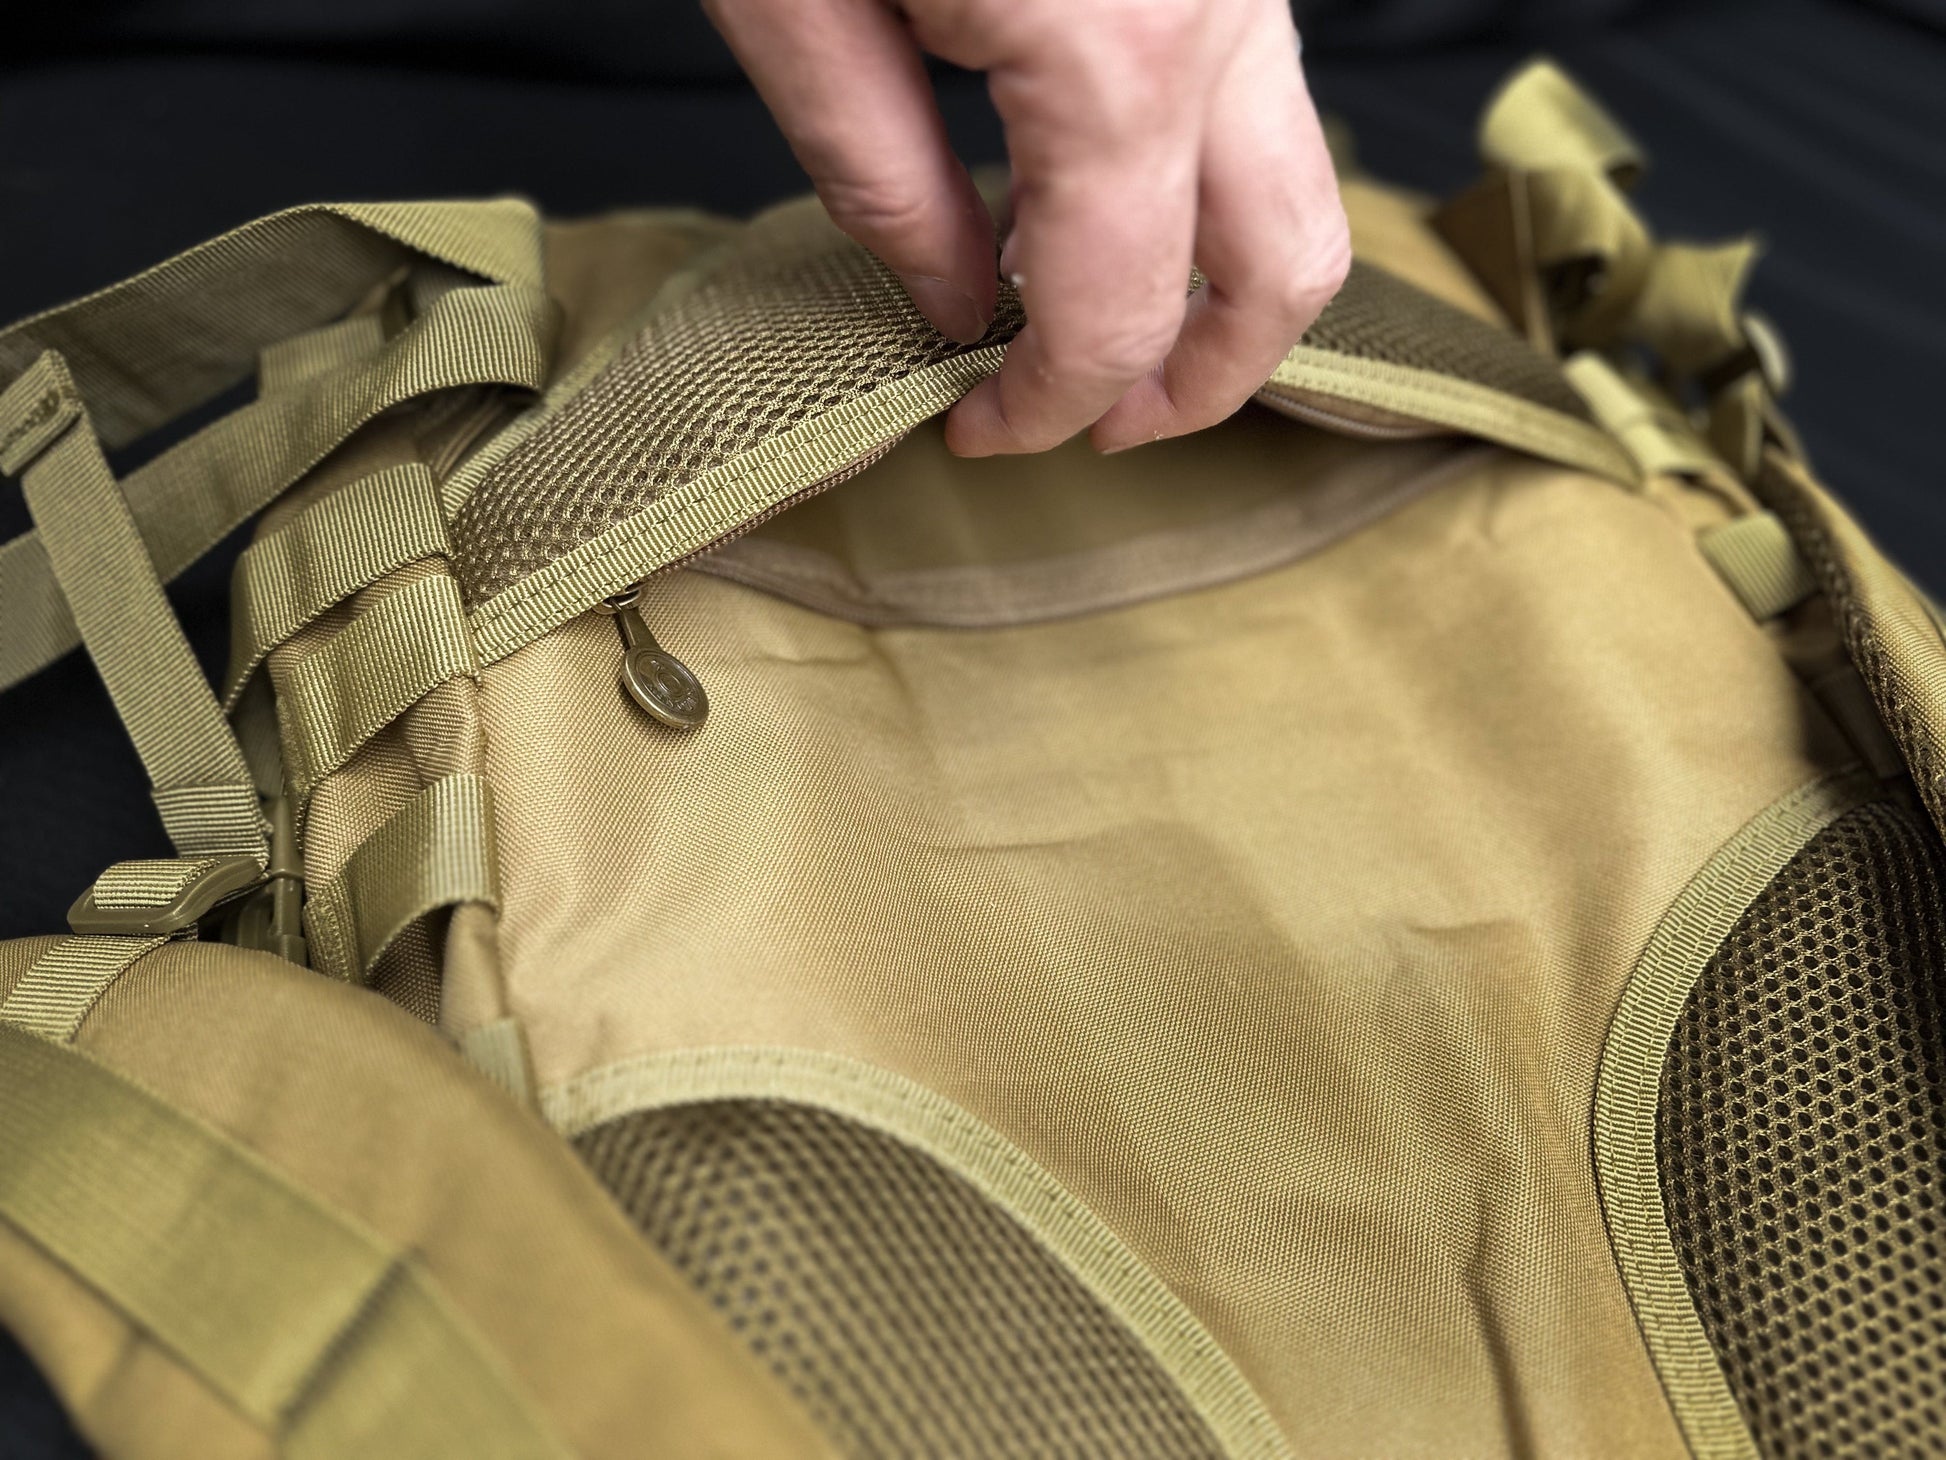 Kenözen Military Backpack KenÖzen Arctos 45L Outdoor Rucksack Backpack, Morale/Unit Patch and Hydration System